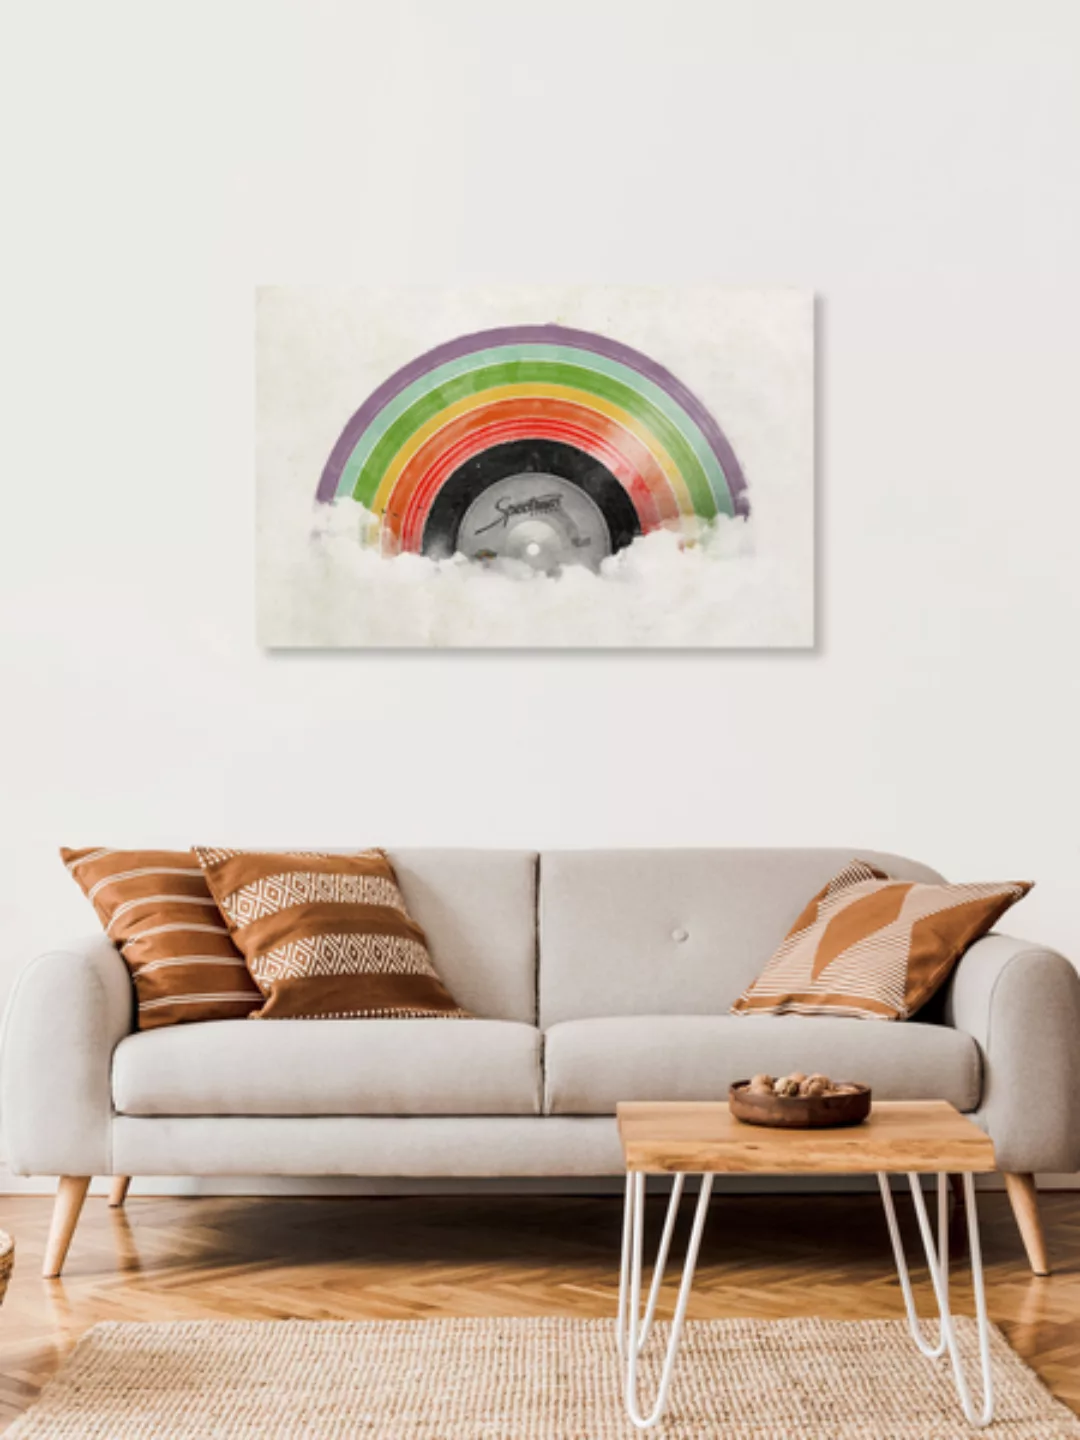 Poster / Leinwandbild - Rainbow Classics günstig online kaufen